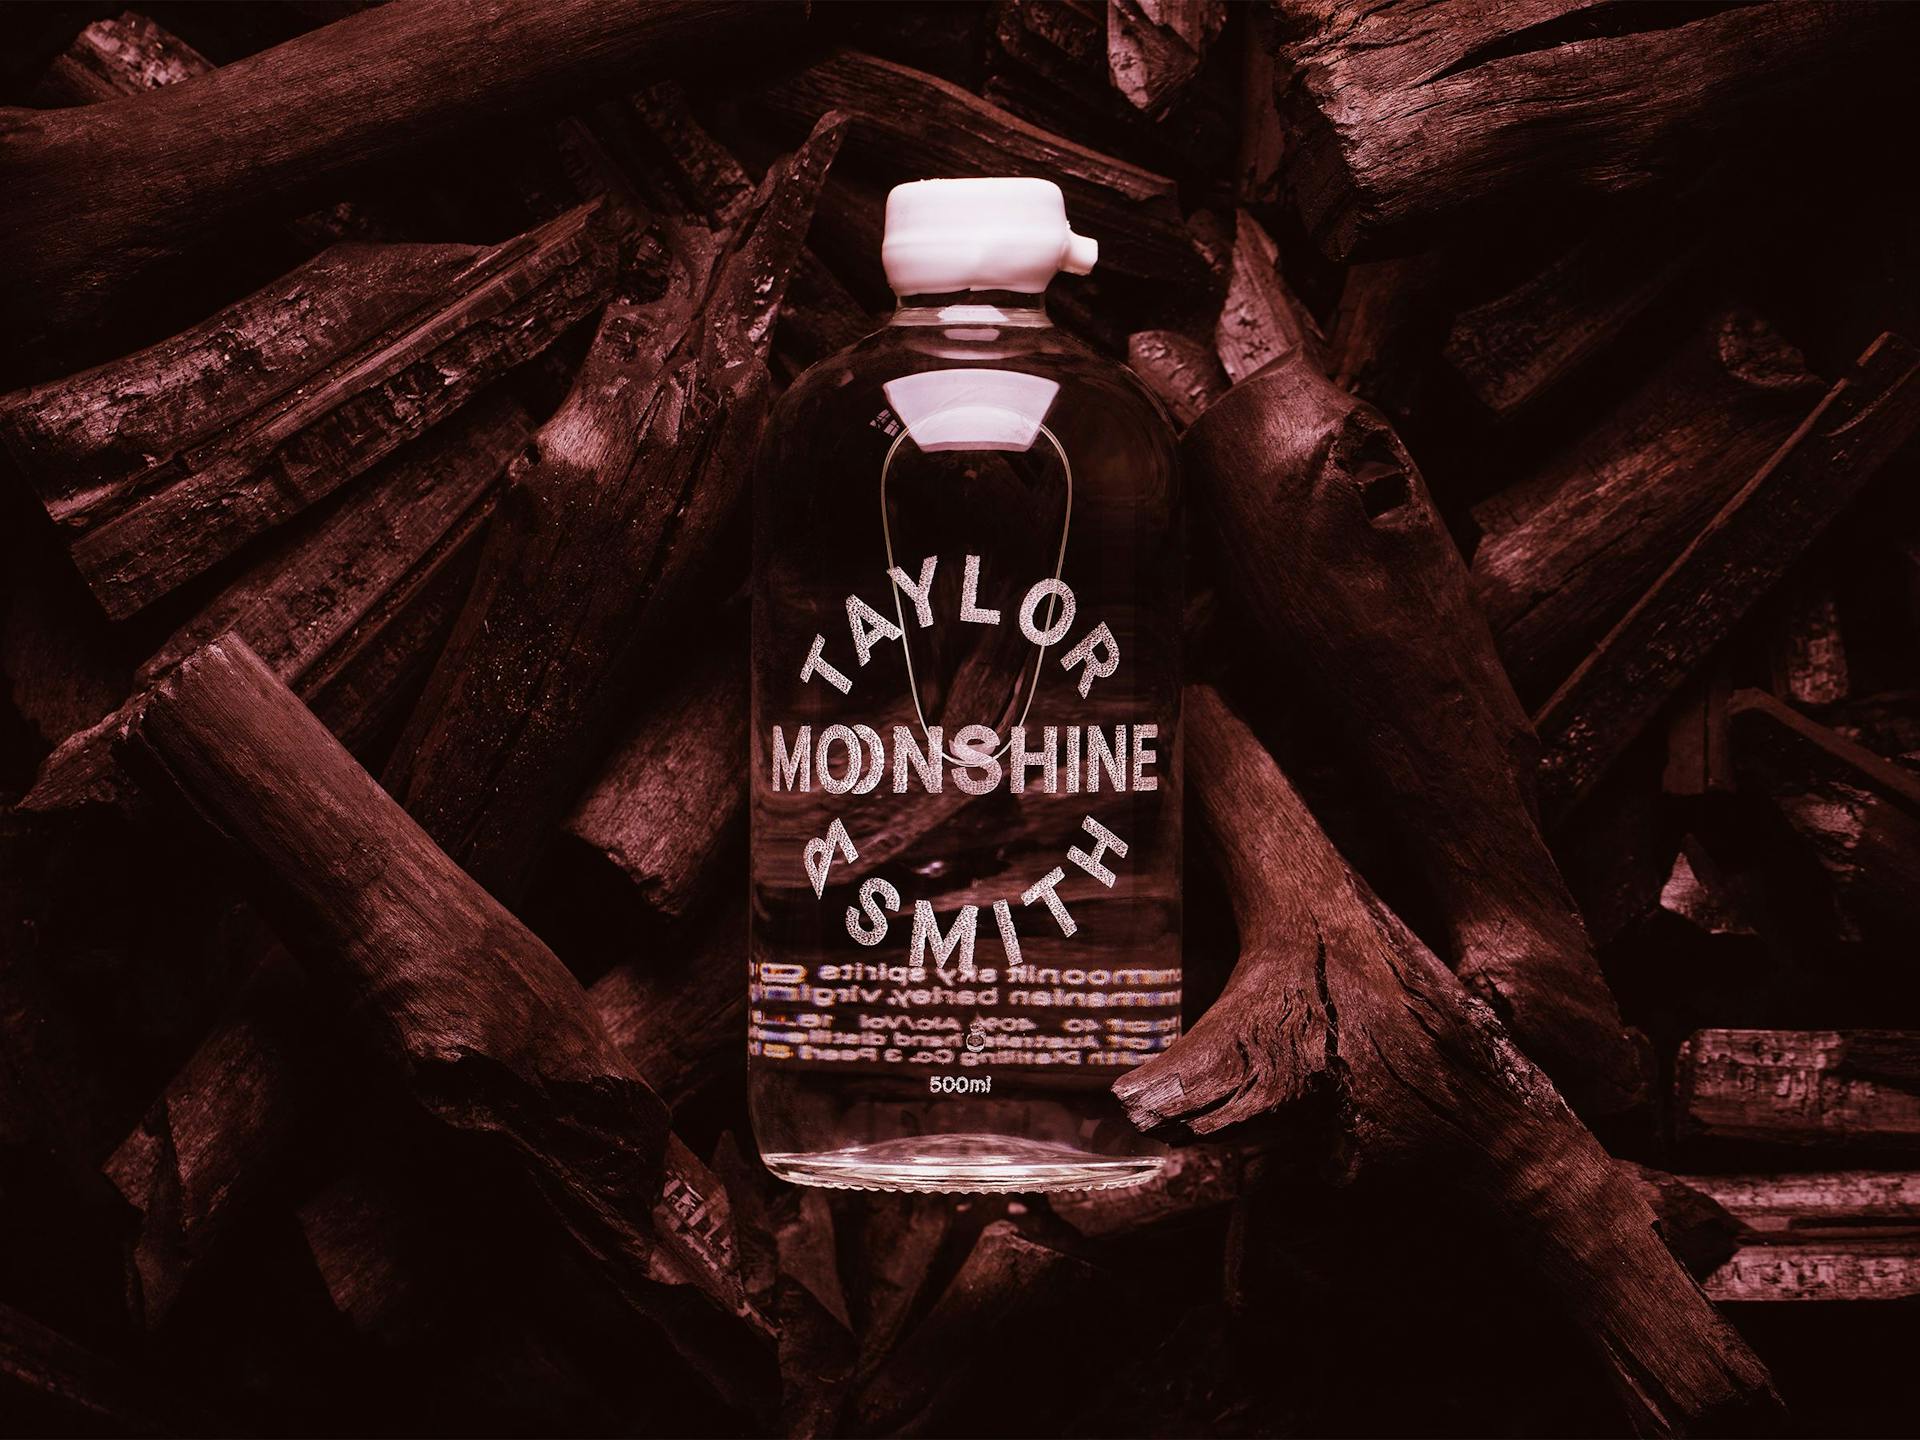 A bottle of craft moonshine sitting on wood